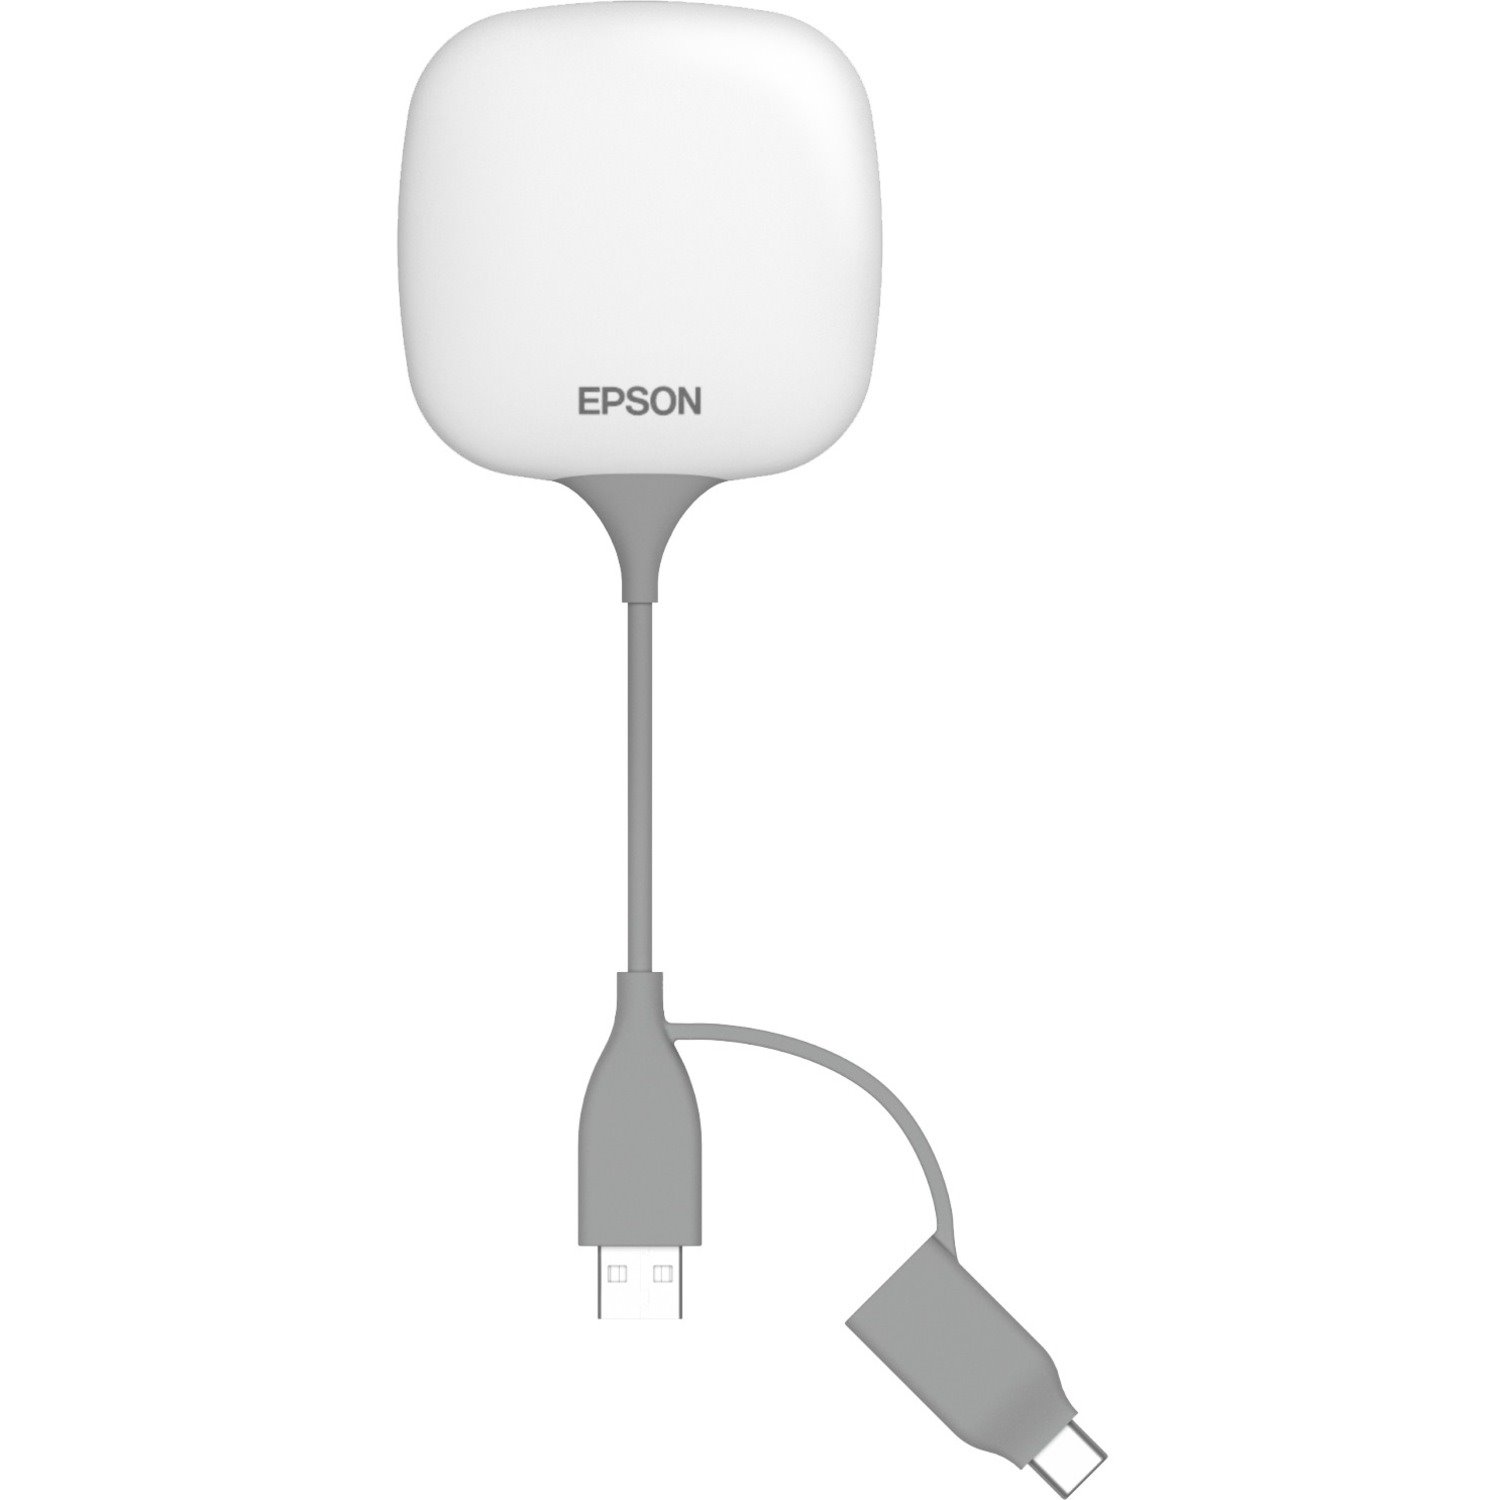 Epson ELPWT01 - Wireless Transmitter